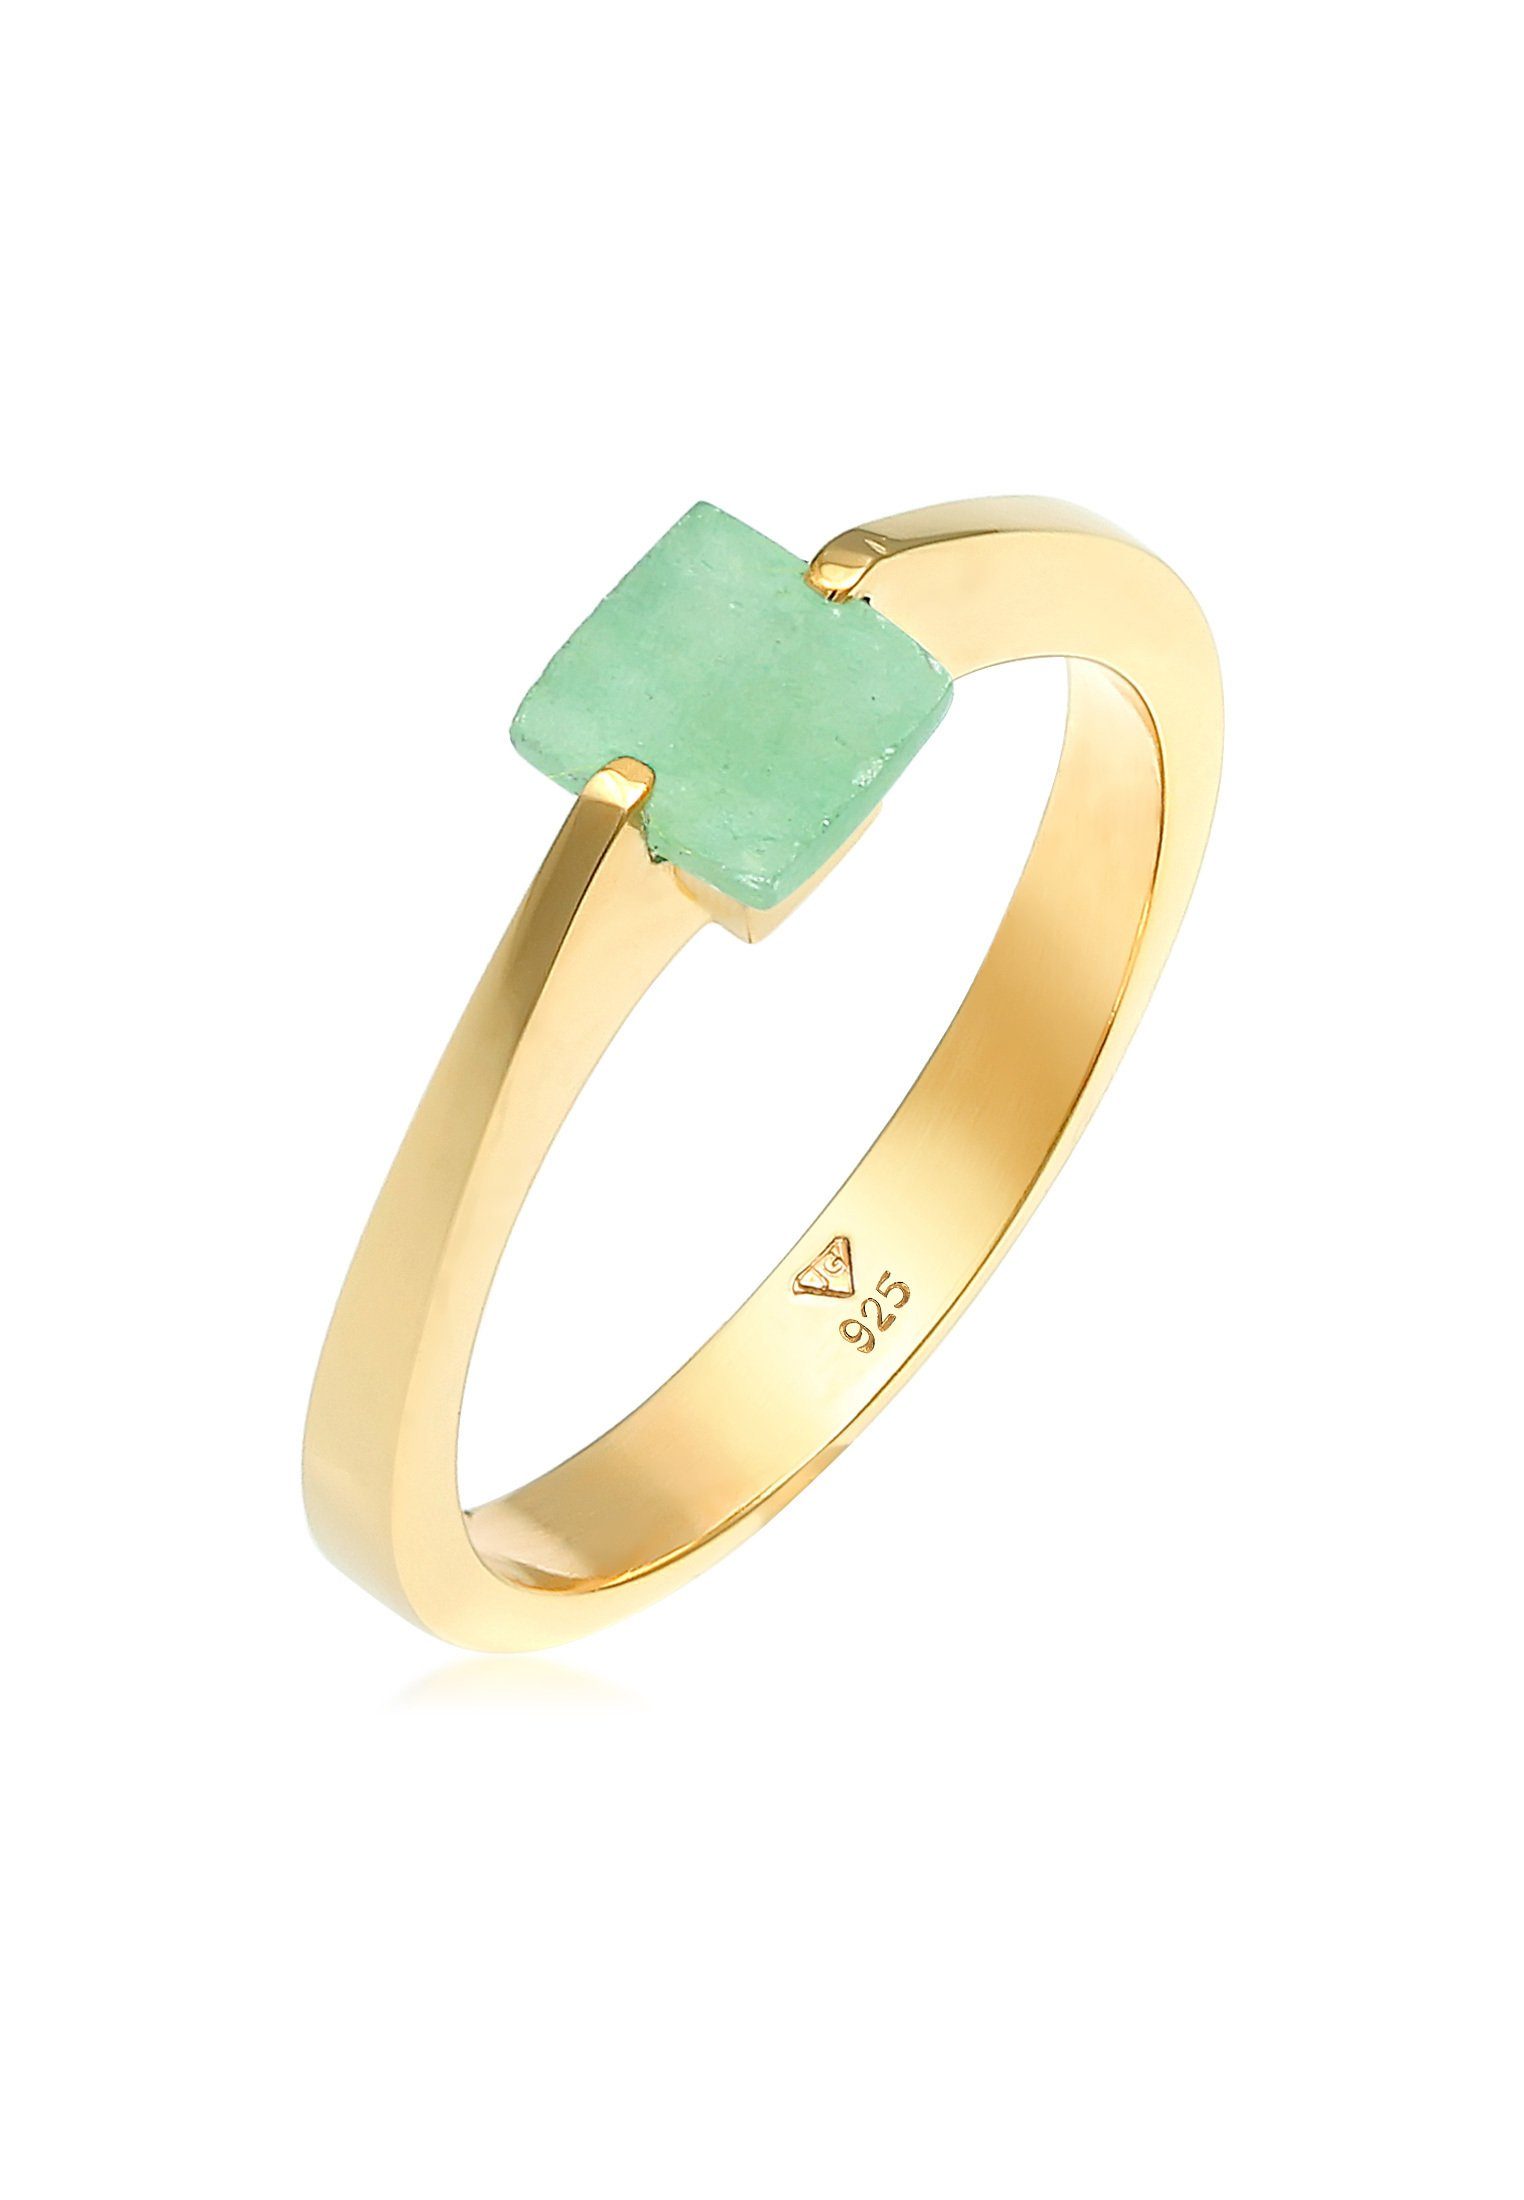 Grün Dreieck Elli Premium Jade Fingerring vergoldet Silber klassik 925